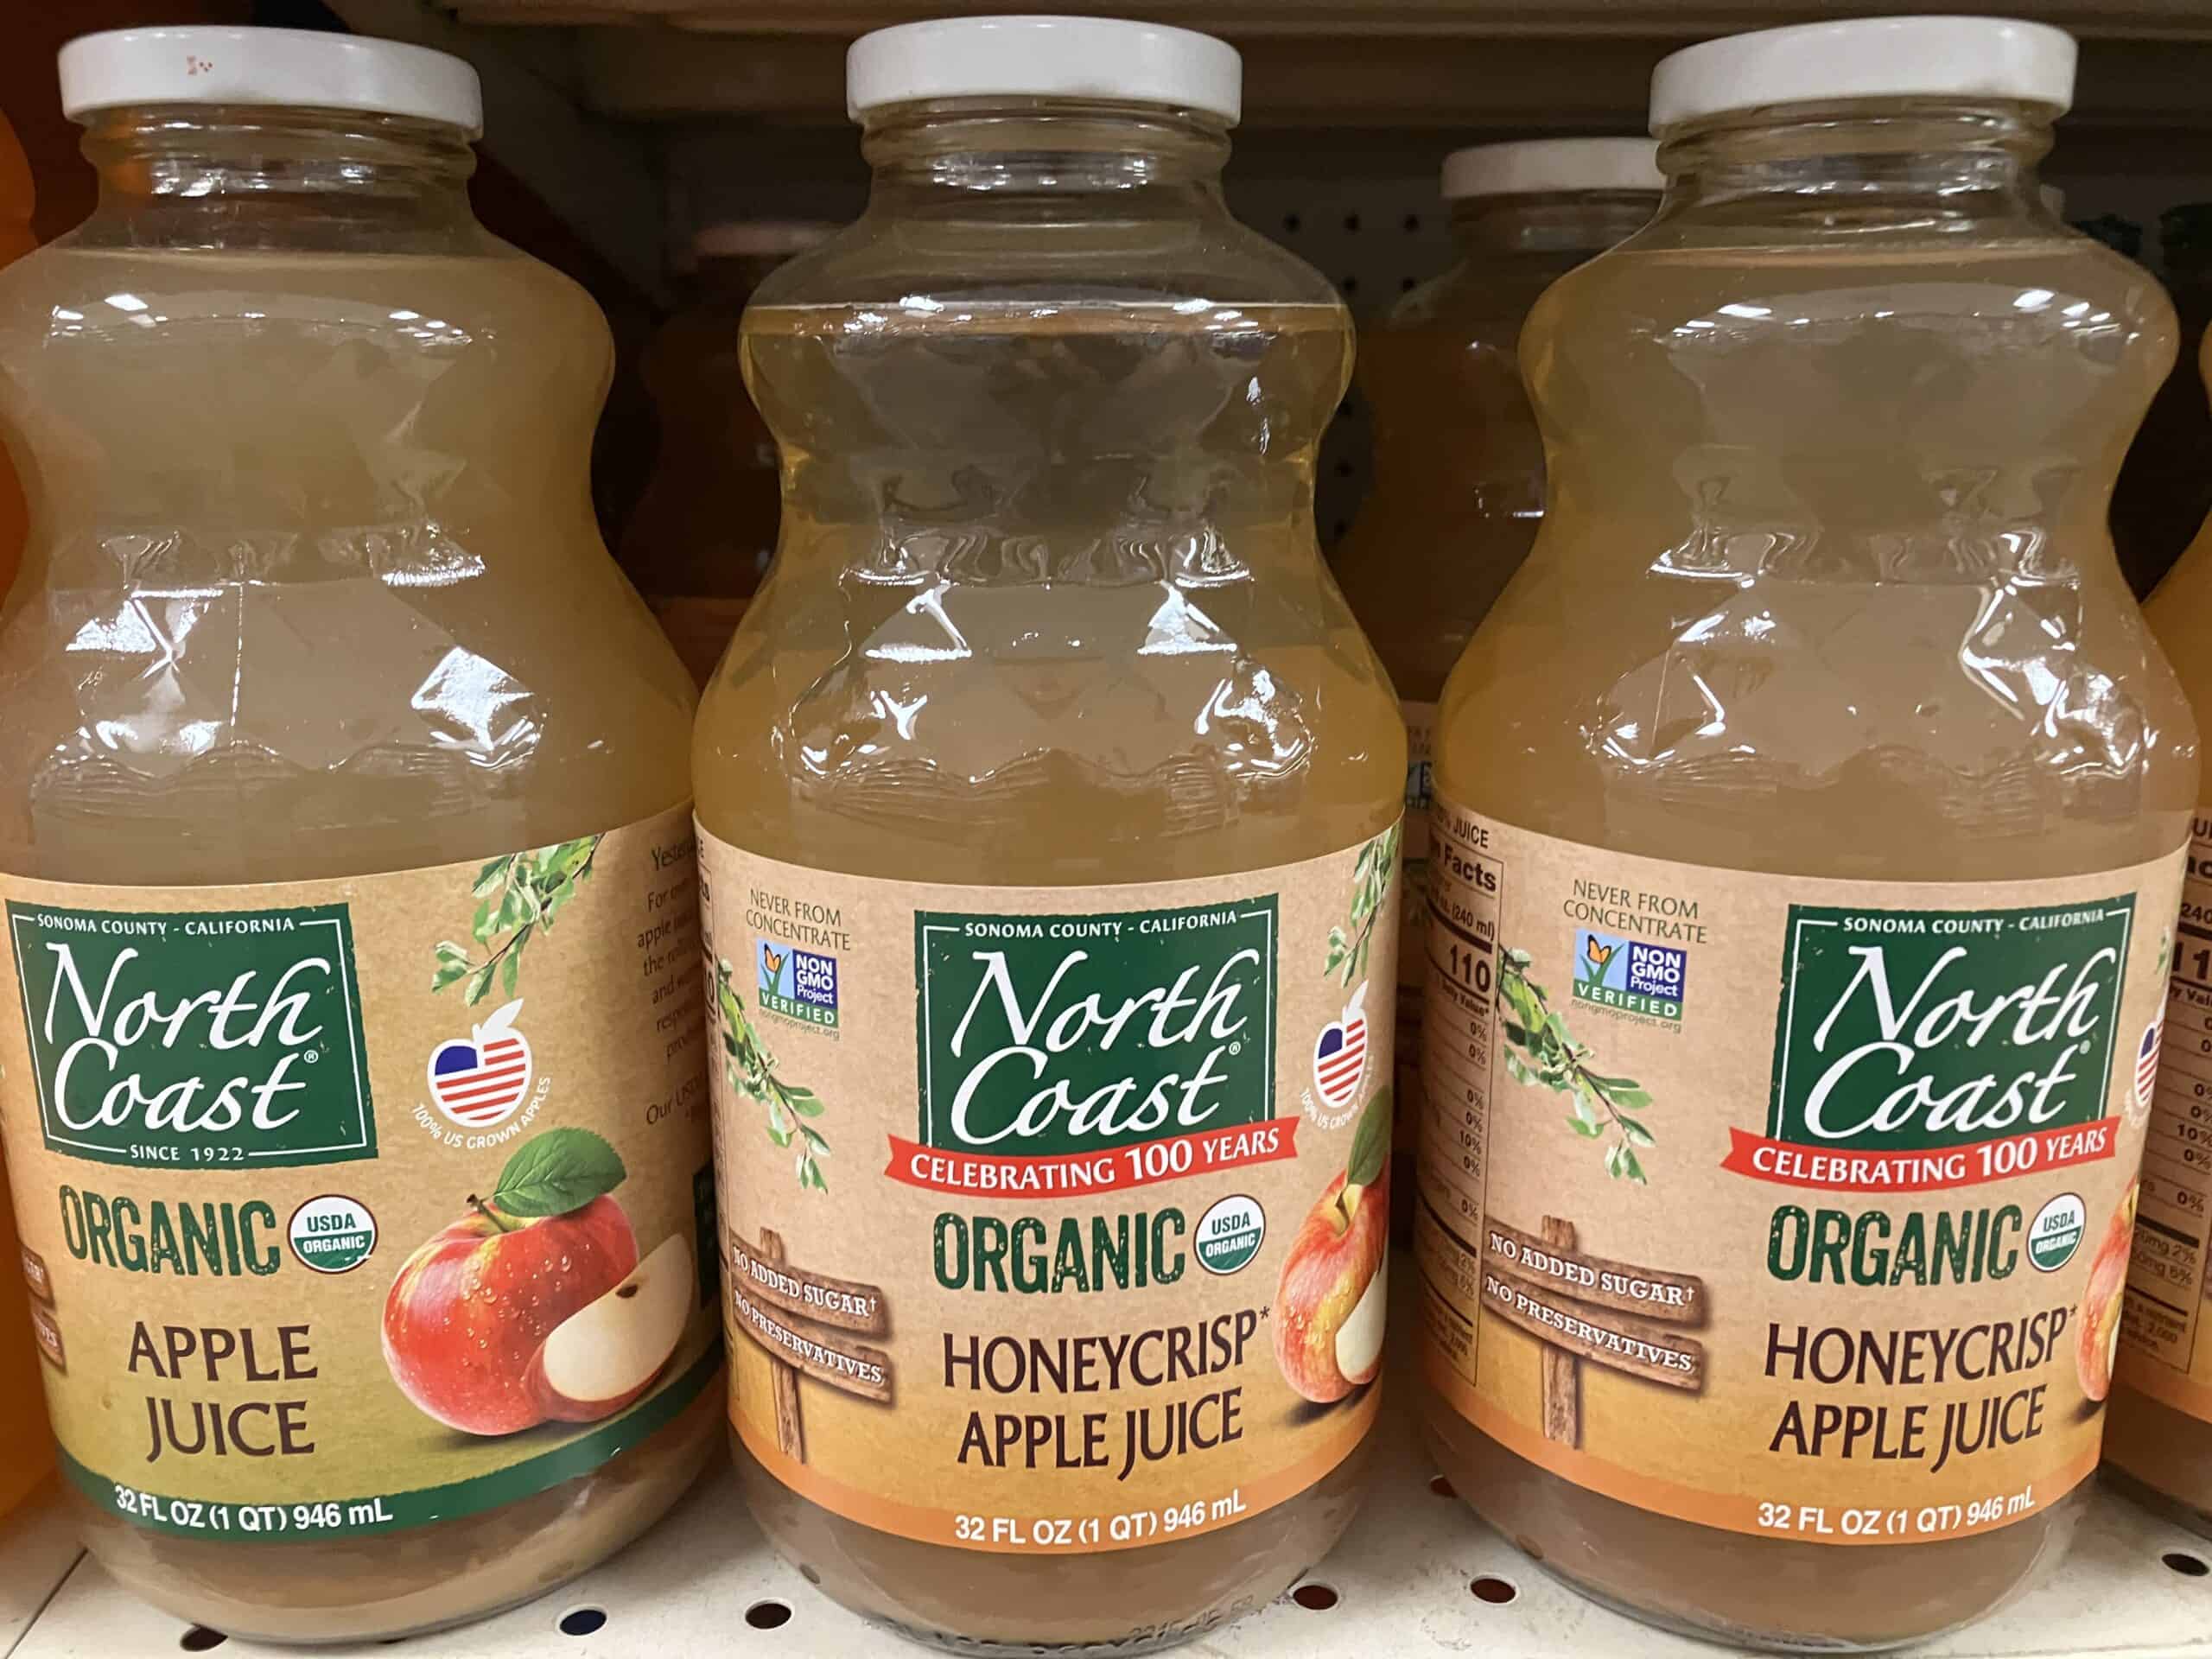 North Coast organic Honeycrisp apple juice